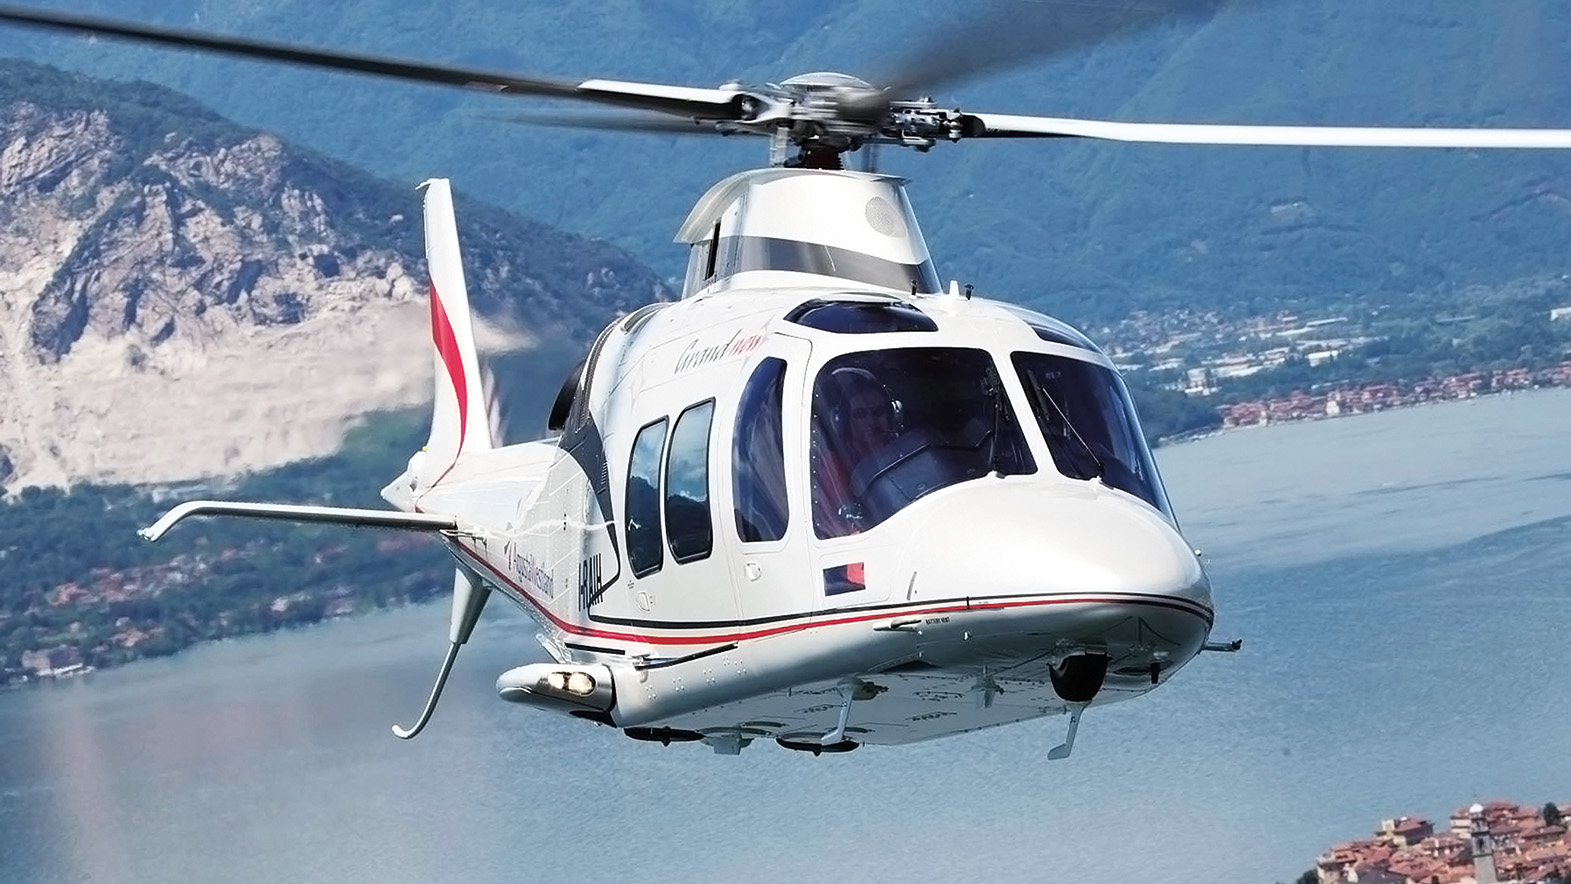 Zermatt helicopter transfer flights